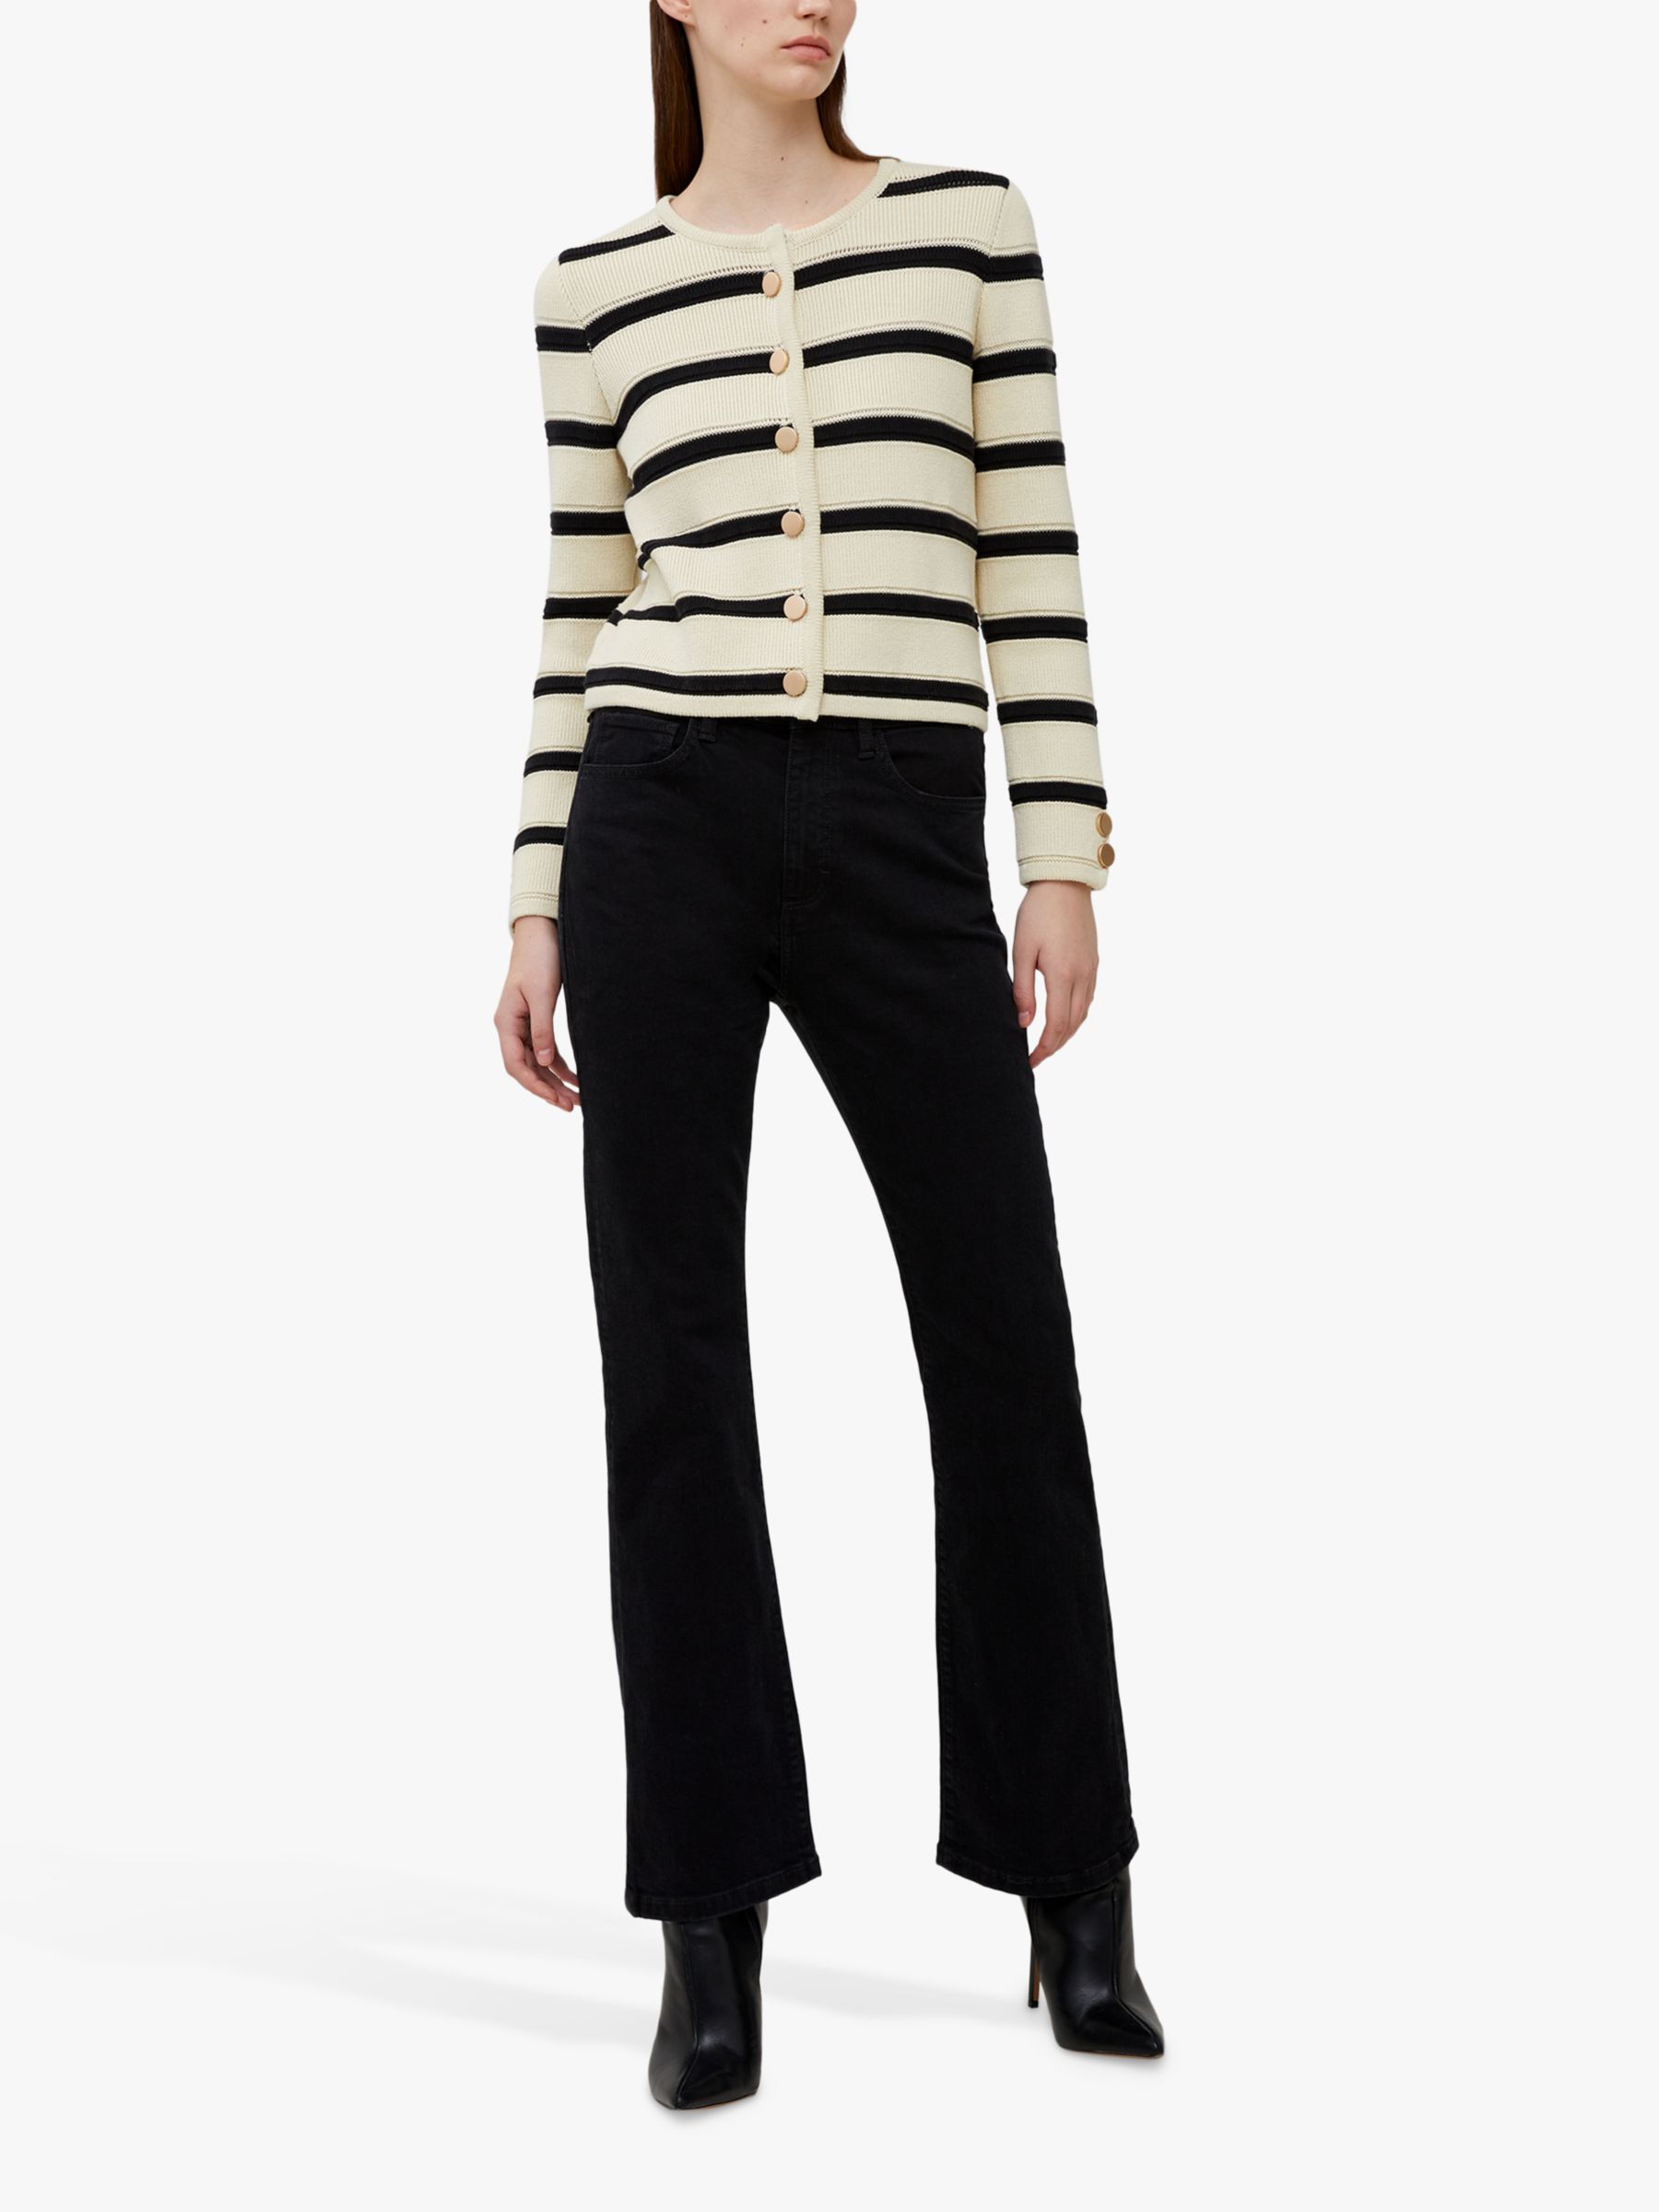 French Connection Marloe Striped Rib Knit Cardigan, Classic Cream/Black, L